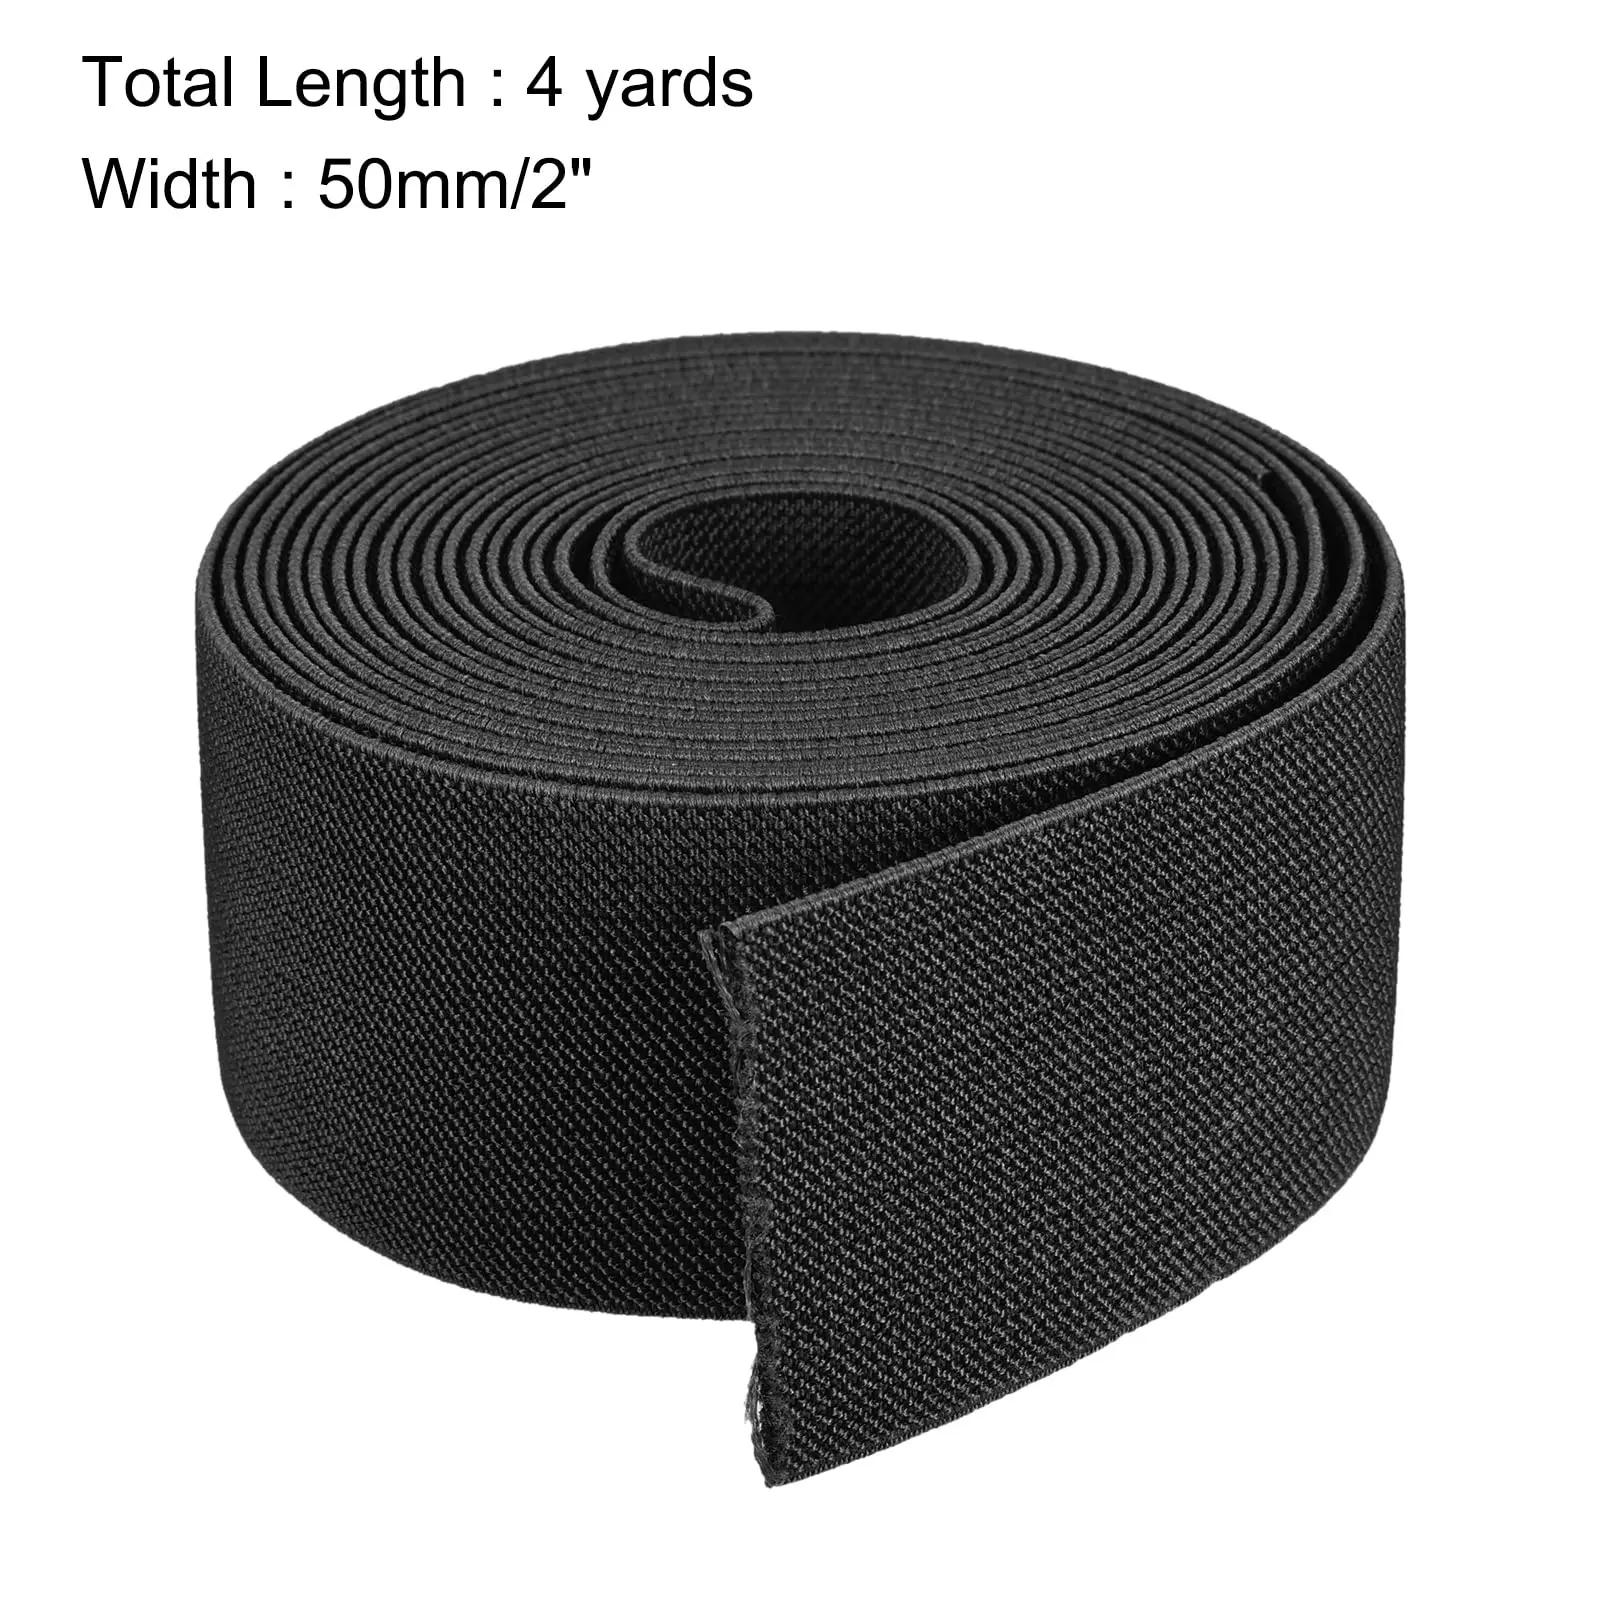 Черная цветная мягкая вязаная плетеная эластичная лента для шитья одежды аксессуары